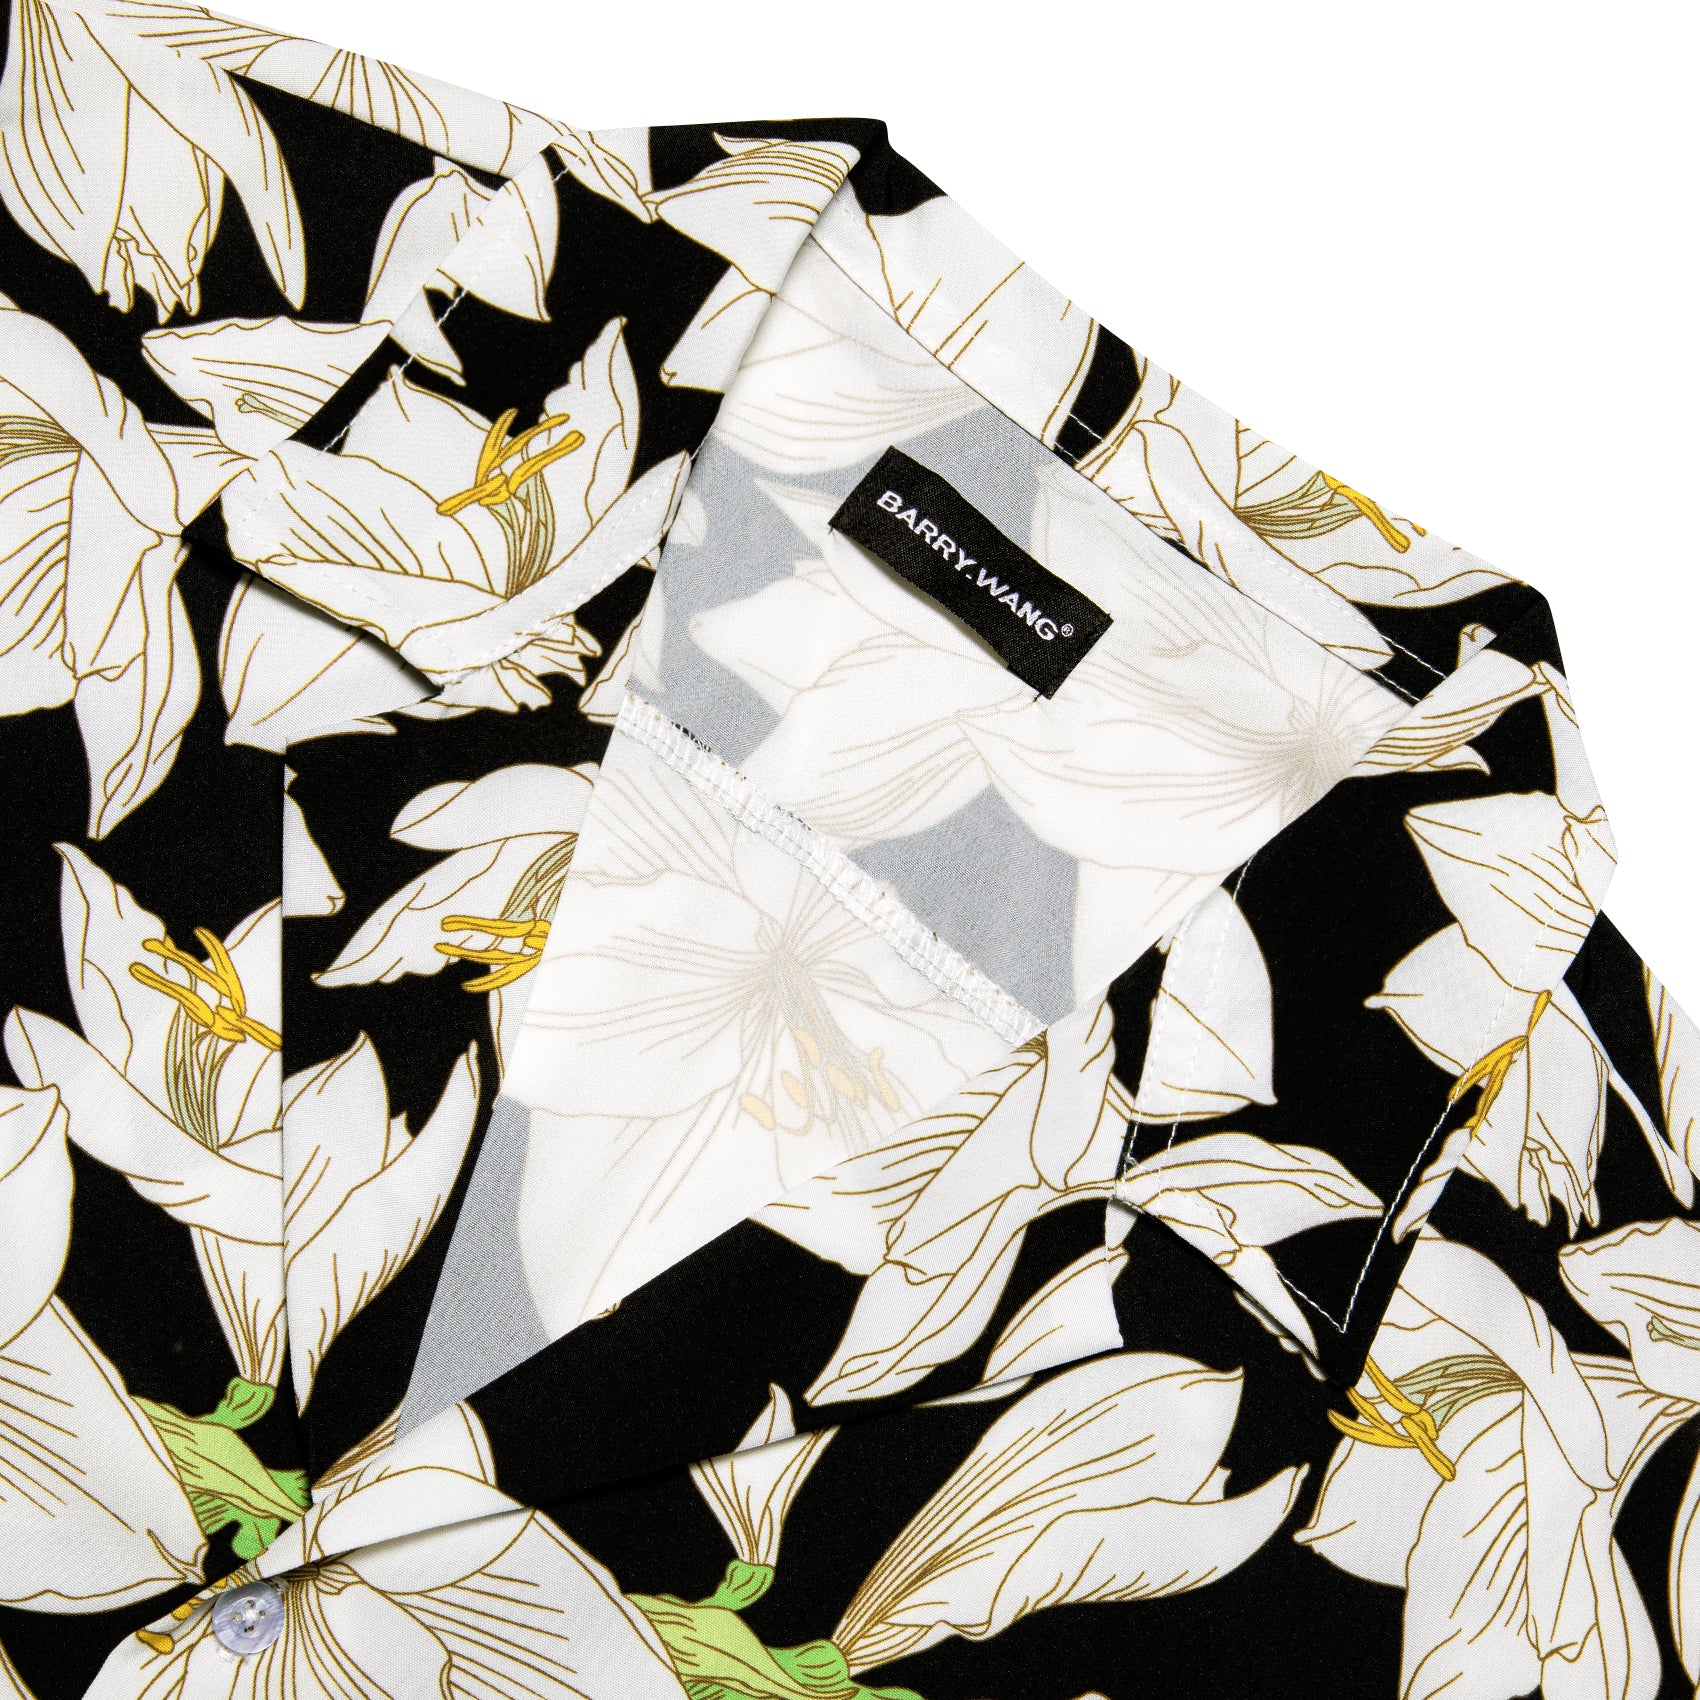 Men's Black White Lily Floral Pattern Short Sleeves Summer Hawaii Shirt